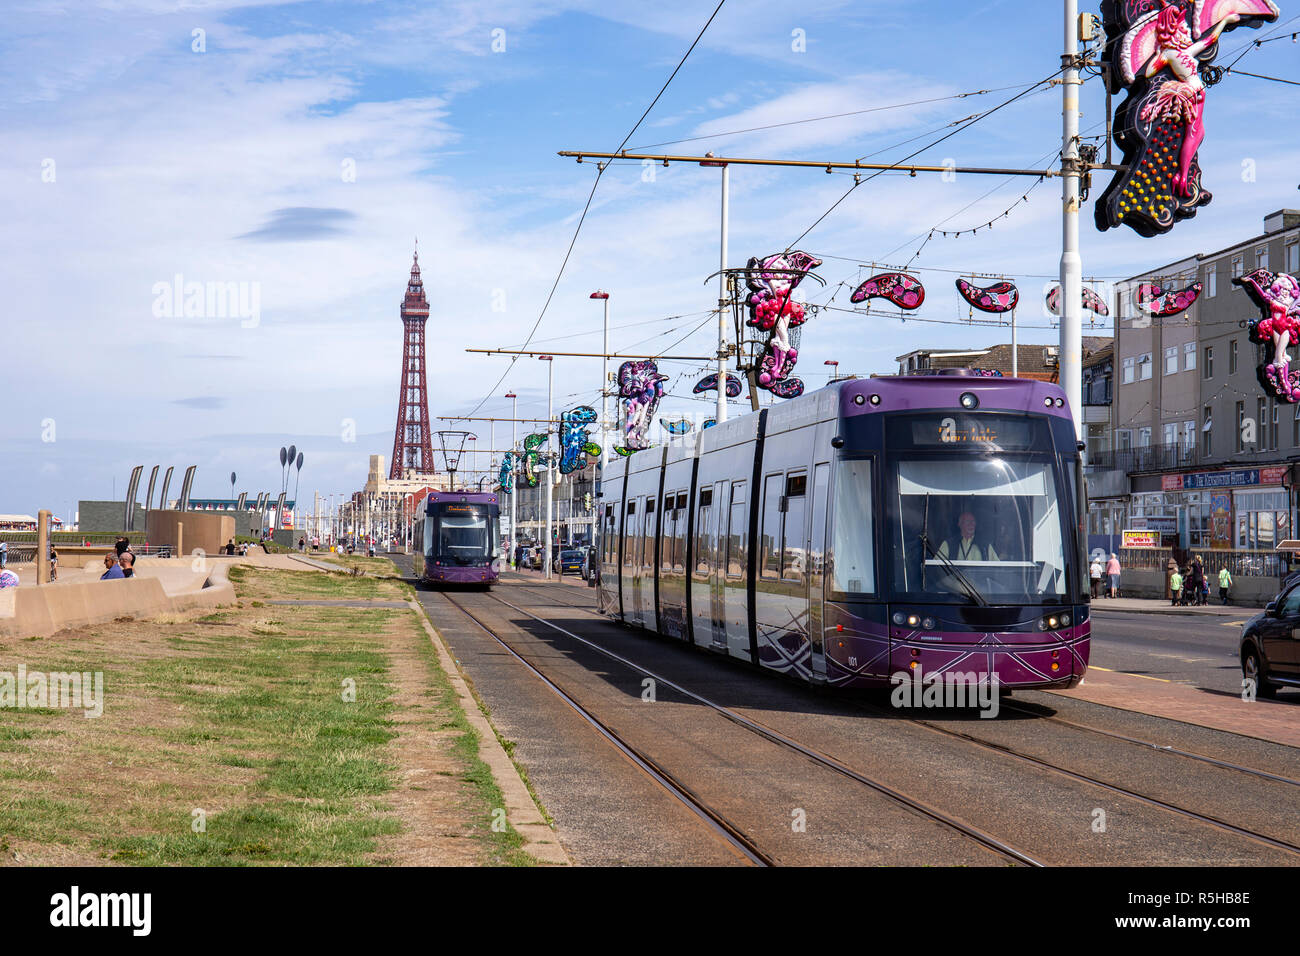 Bombardier Flexity 2 tram on the promenade in Blackpool Lancashire UK Stock Photo